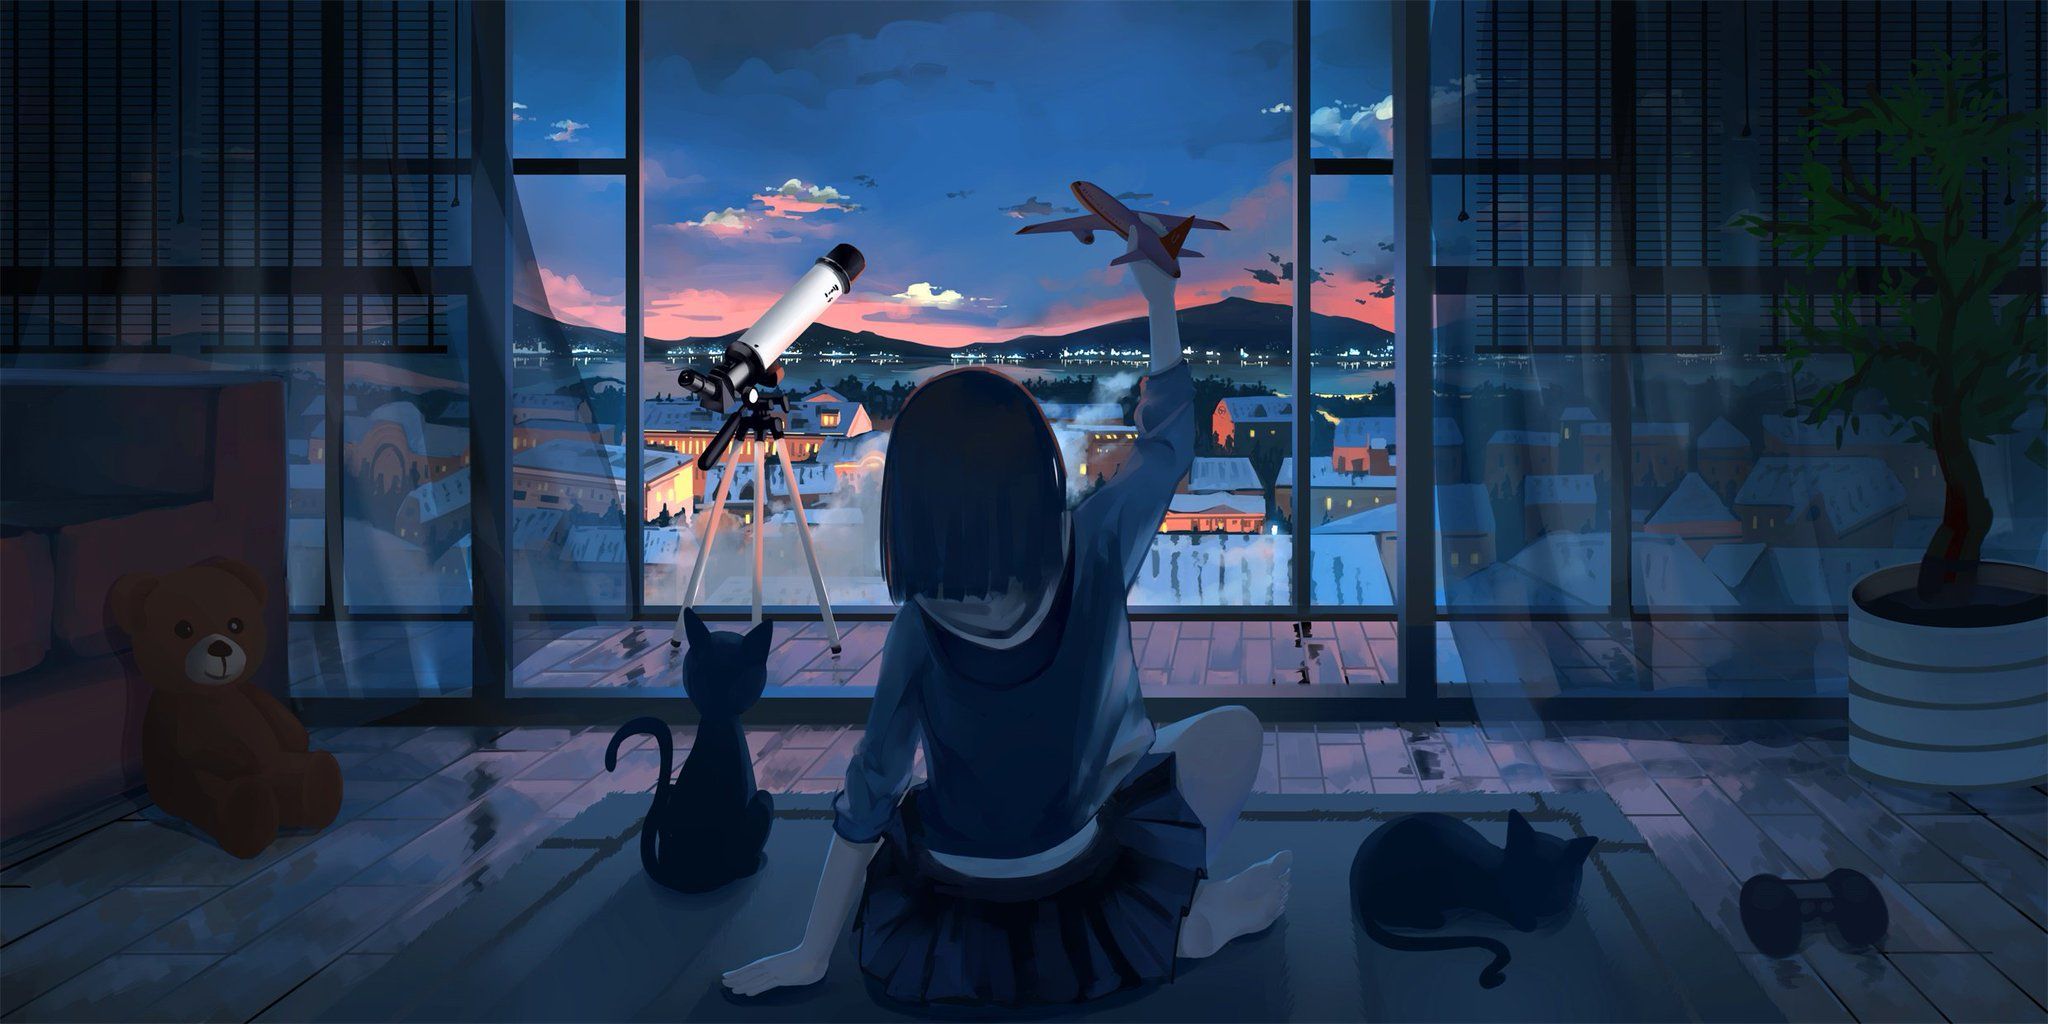 L.L on Twitter. Anime wallpaper, Anime scenery wallpaper, Anime scenery